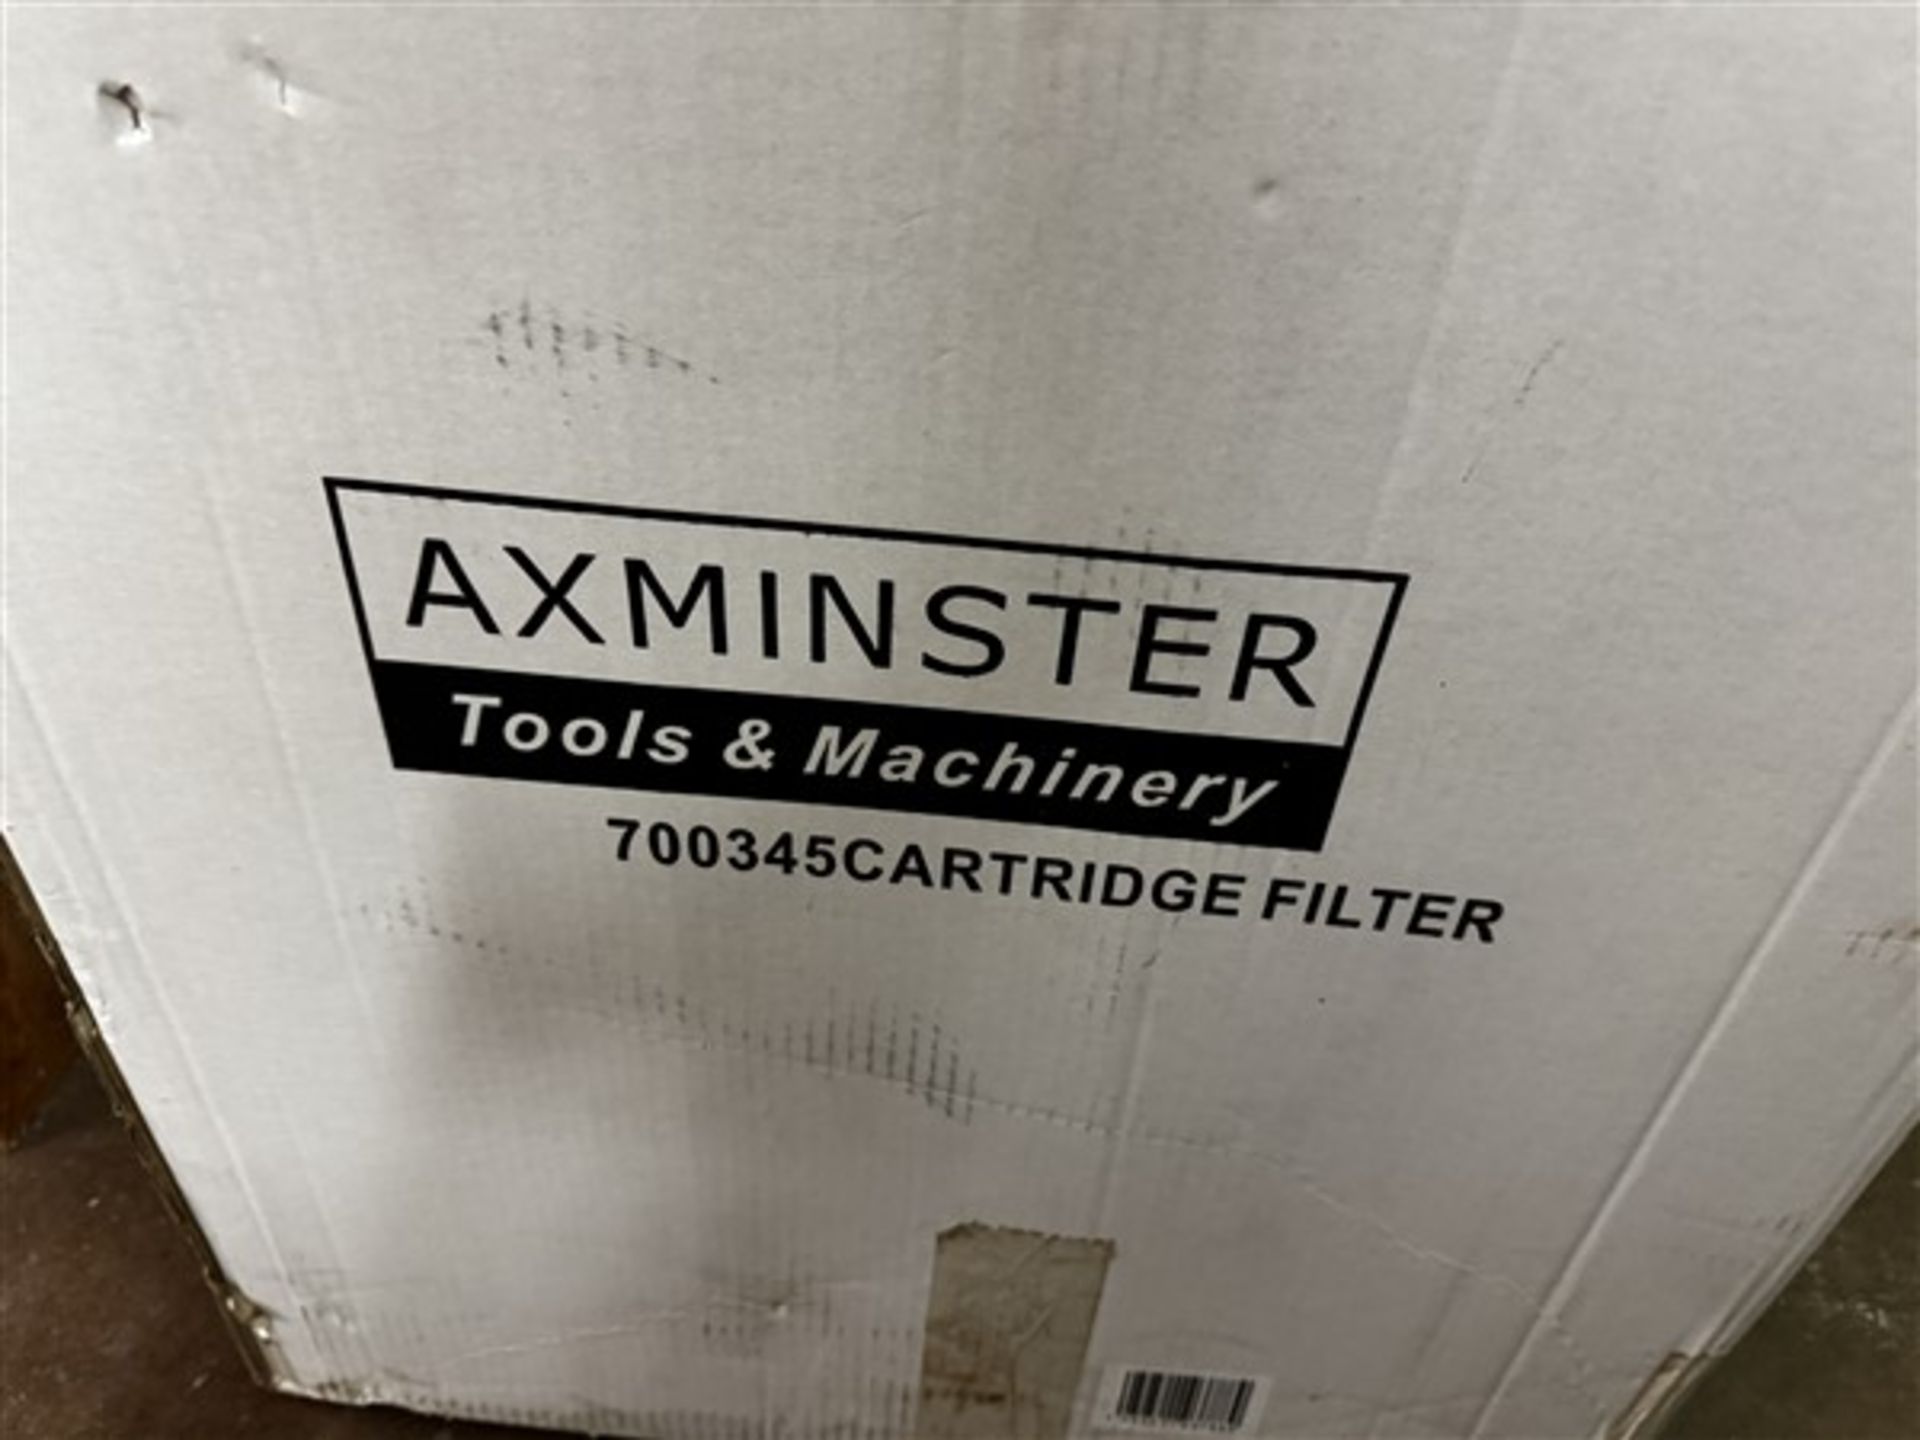 Axminster 700345 cartridge filter - Image 2 of 3